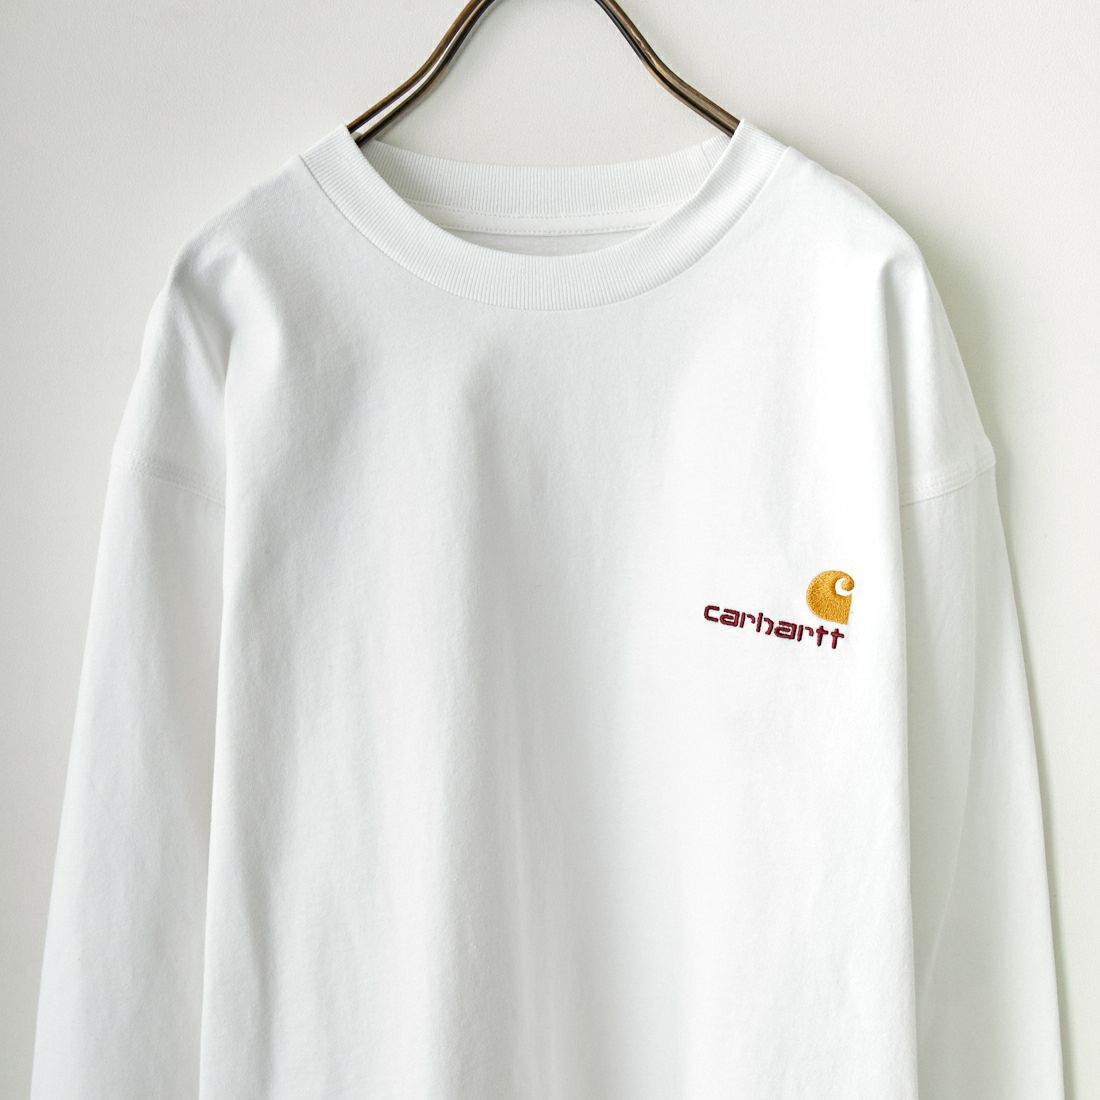 carhartt WIP [カーハートダブリューアイピー] ロングスリーブアメリカンスクリプトTシャツ [I029955]